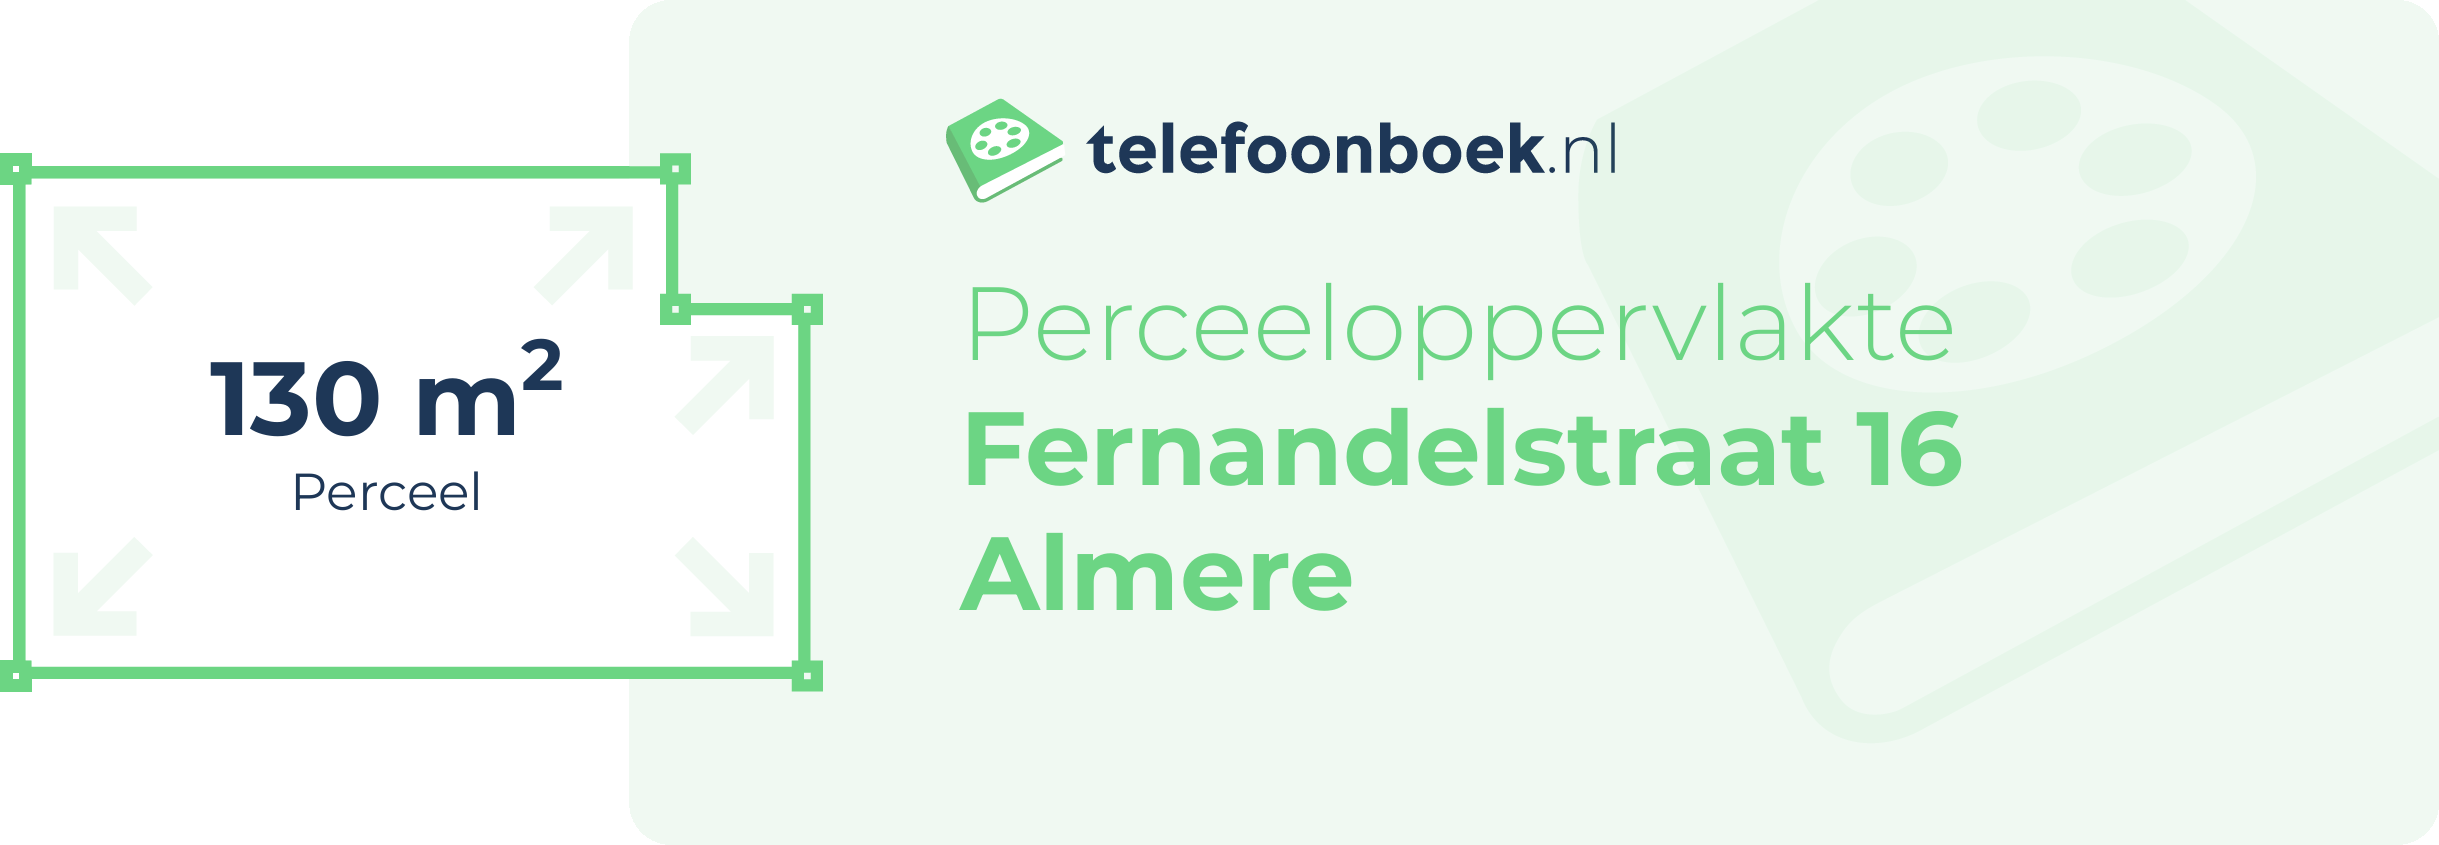 Perceeloppervlakte Fernandelstraat 16 Almere